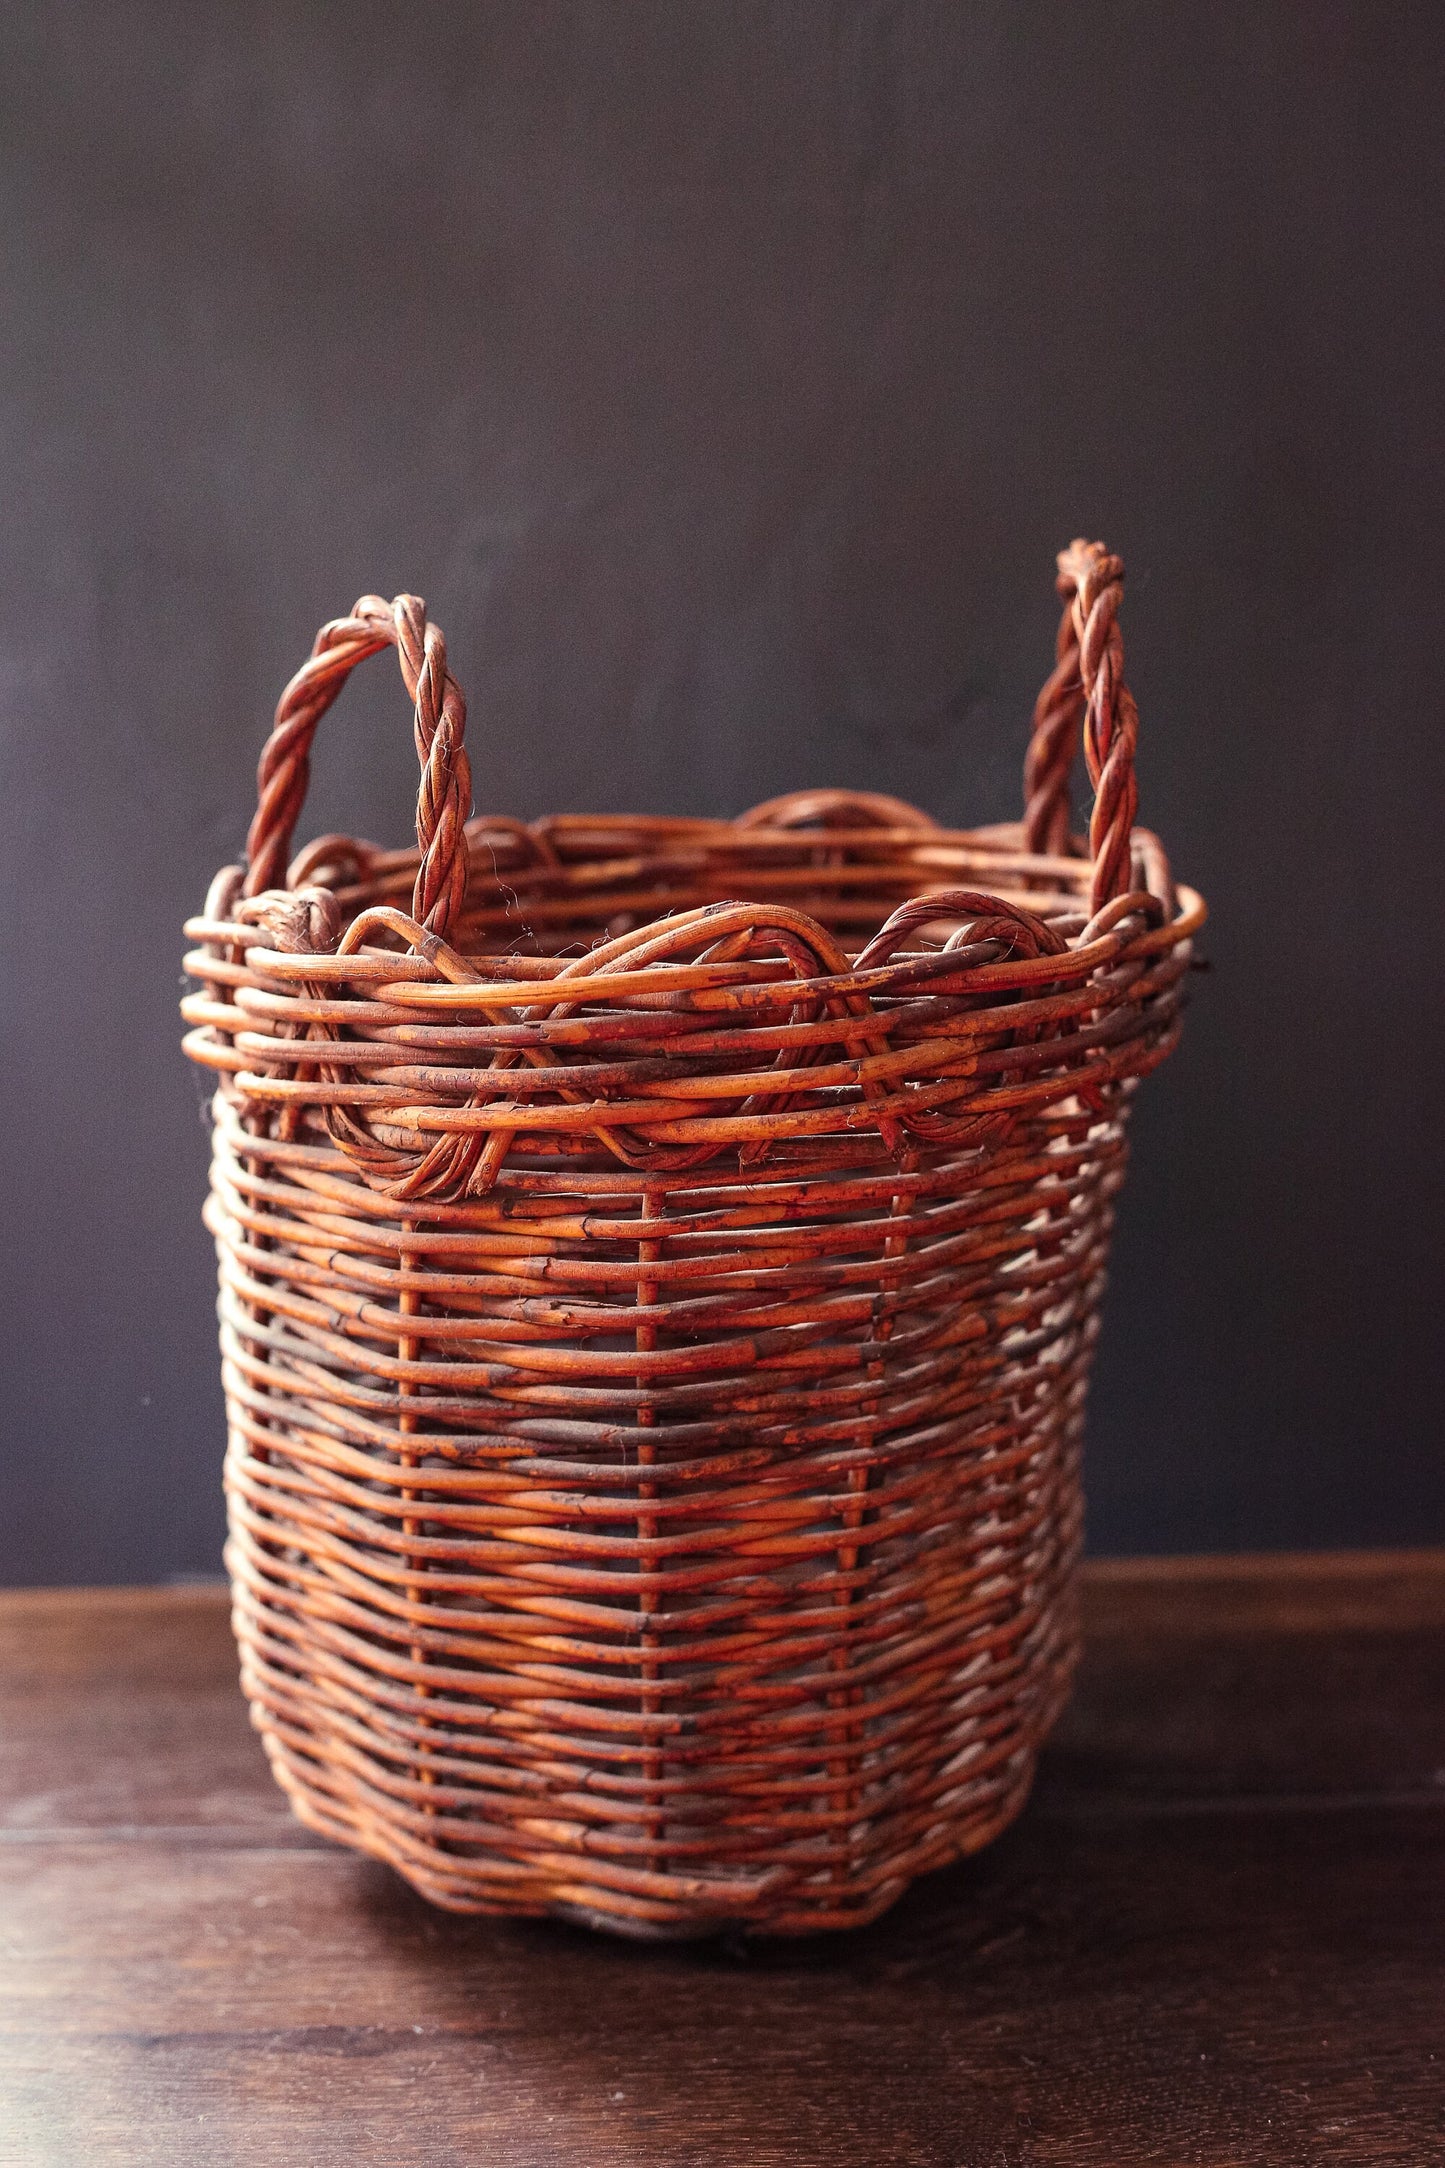 Rustic Branch Basket with Round Irregular Shape and Side Handles - Vintage Primitive Branch Basket with Handles